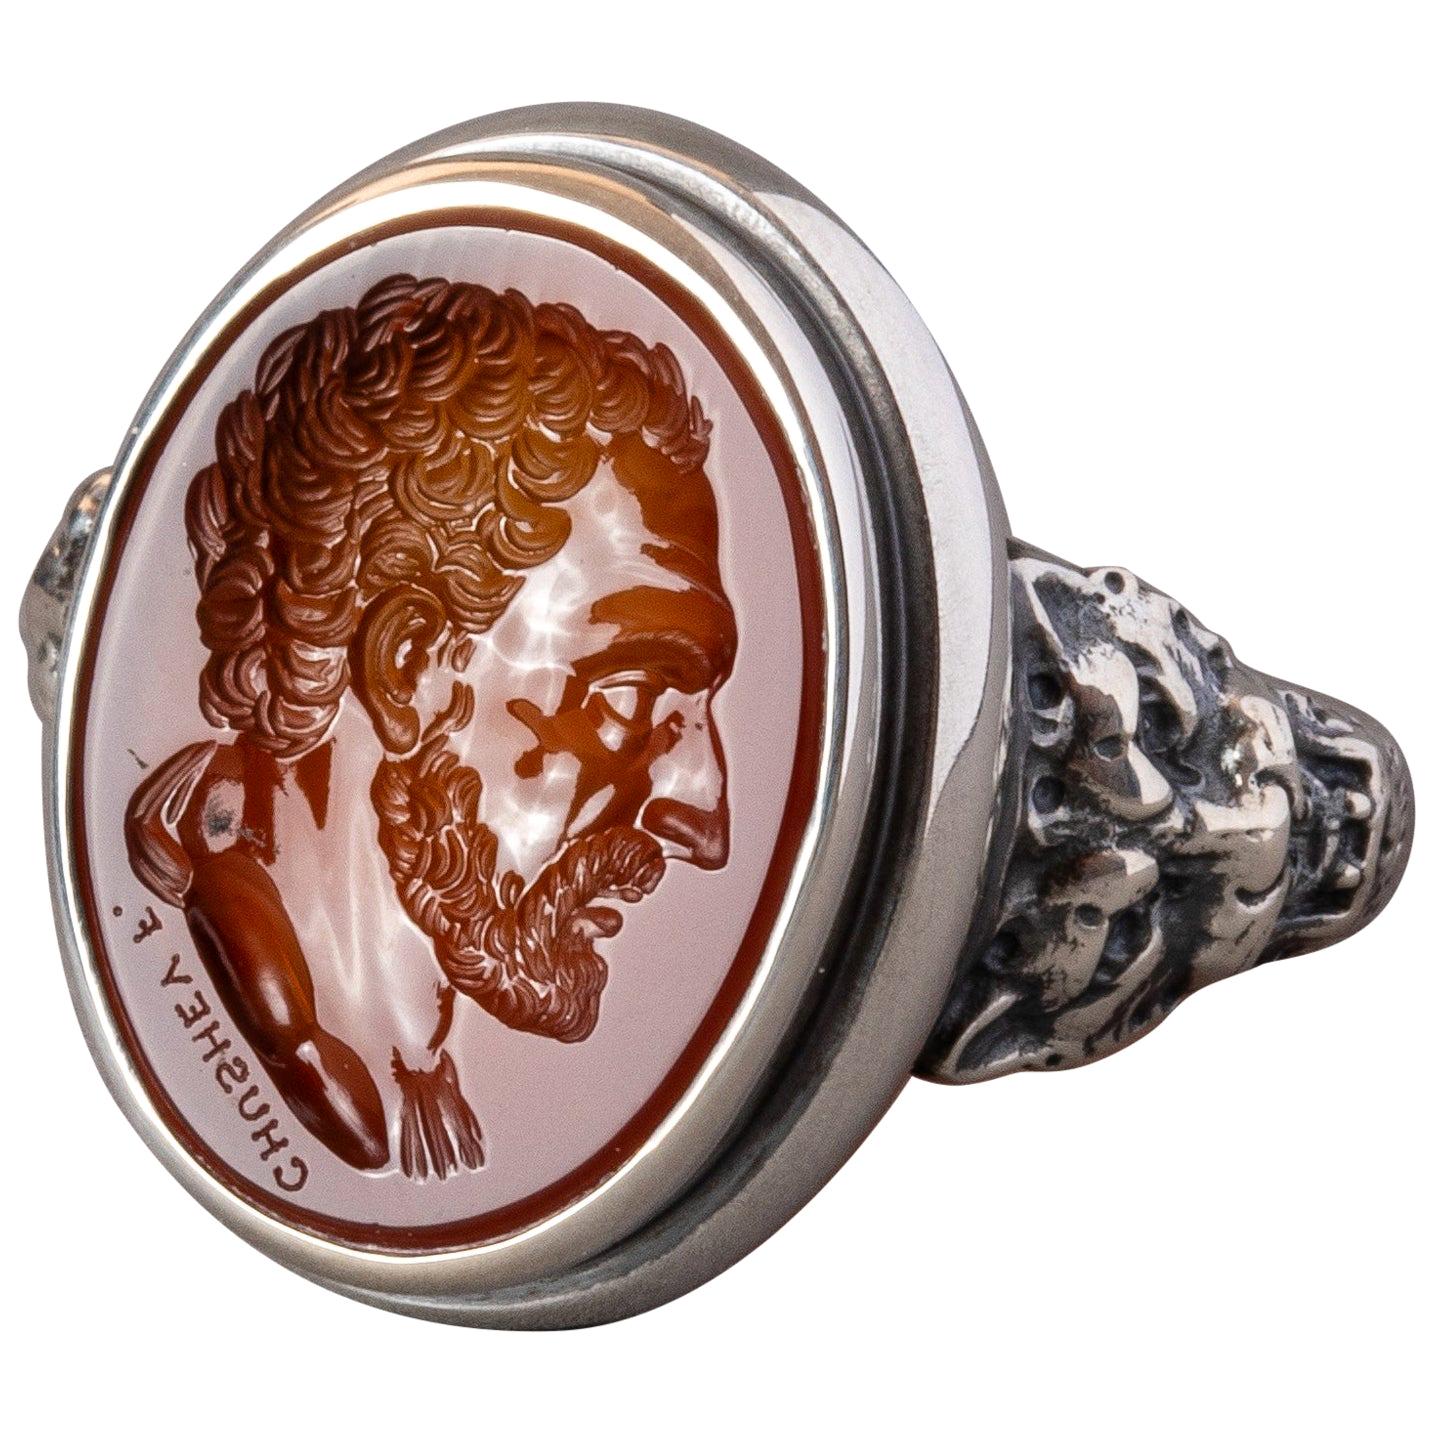 En vente :  Chushev, bague sigillaire Demosthenes en argent sterling avec intaille en cornaline